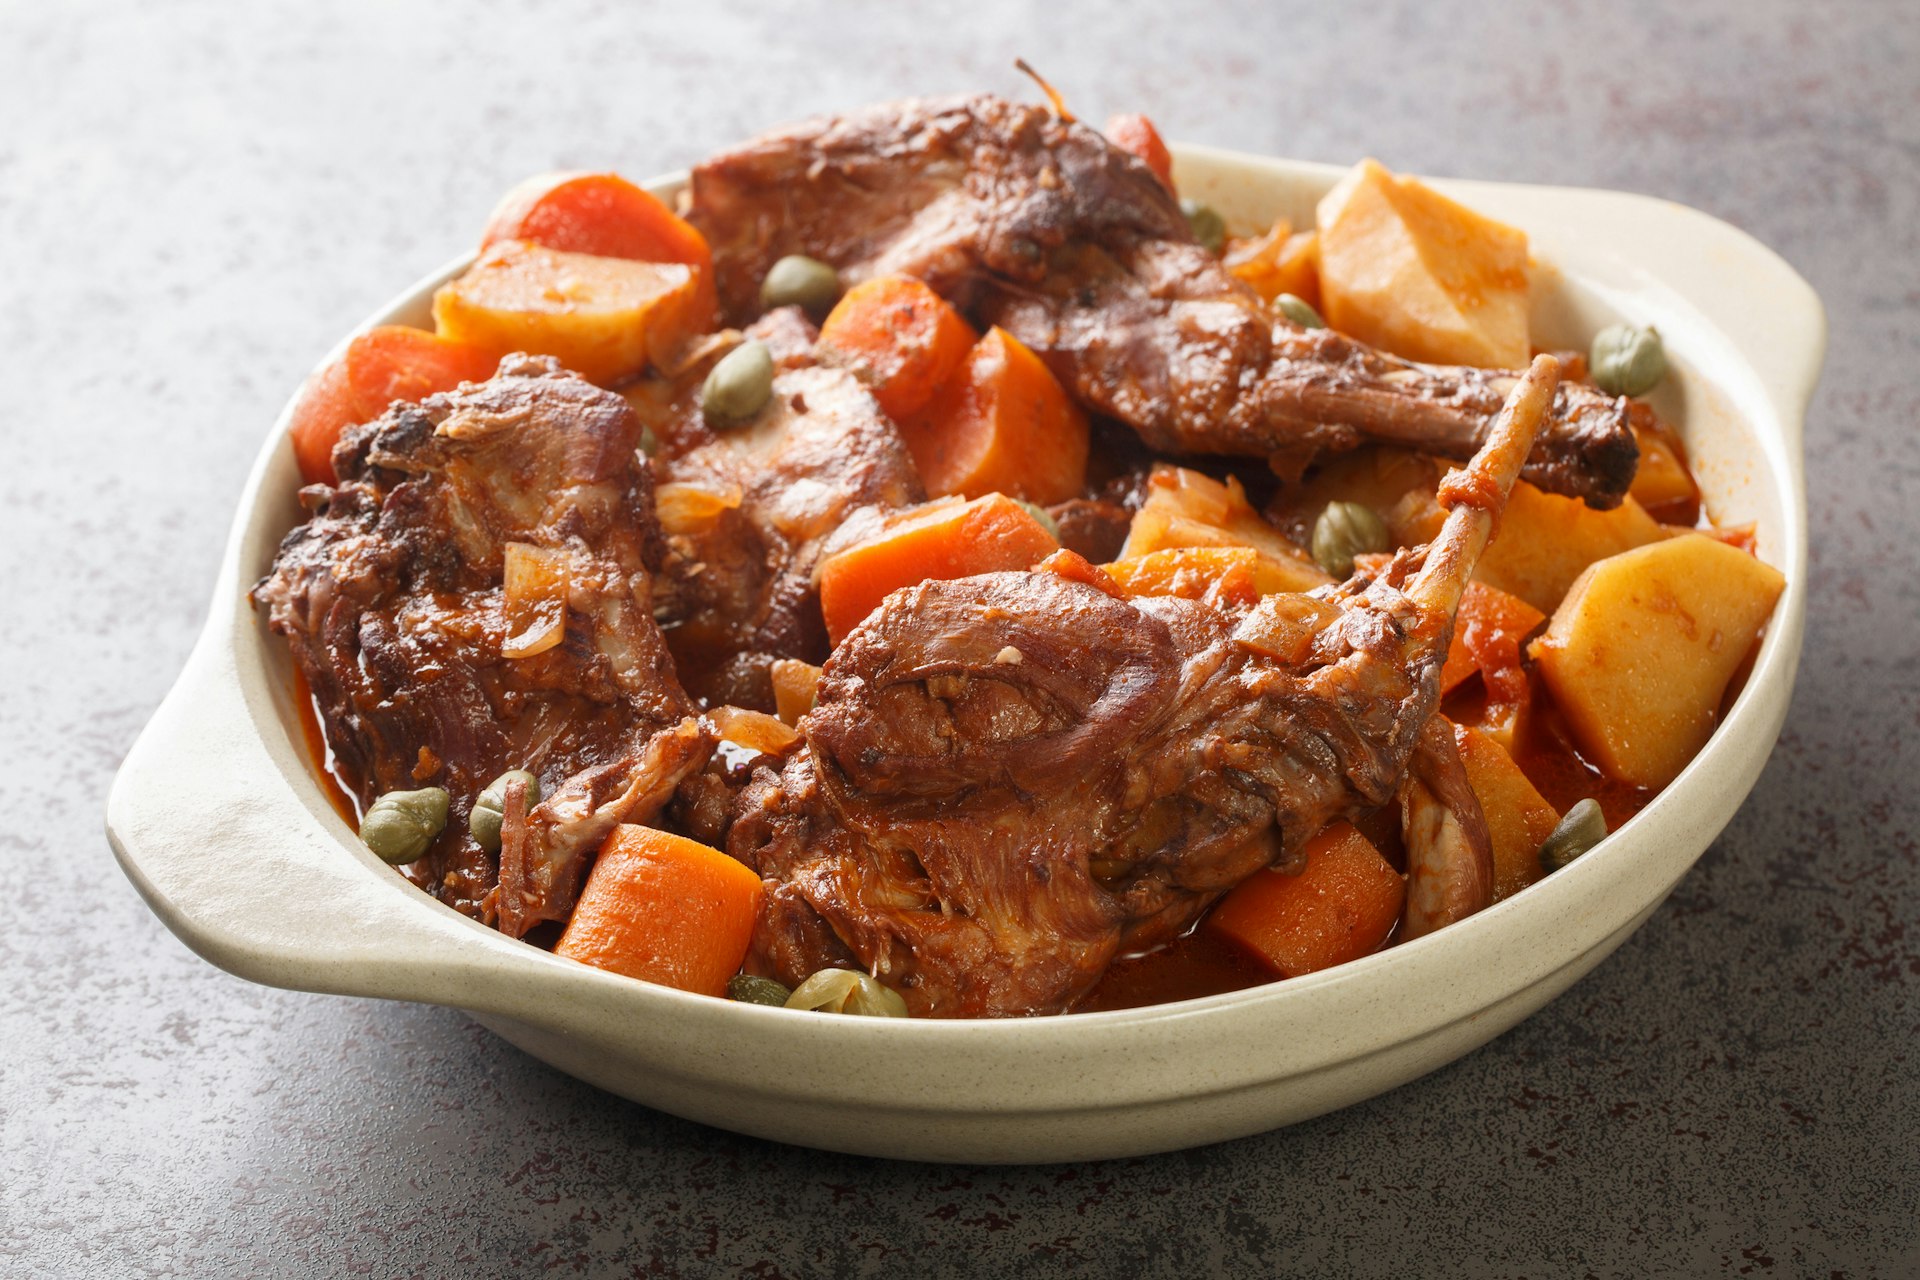 Rabbit Stew Maltese style or Stuffat tal-Fenek closeup in the pan on the table. 